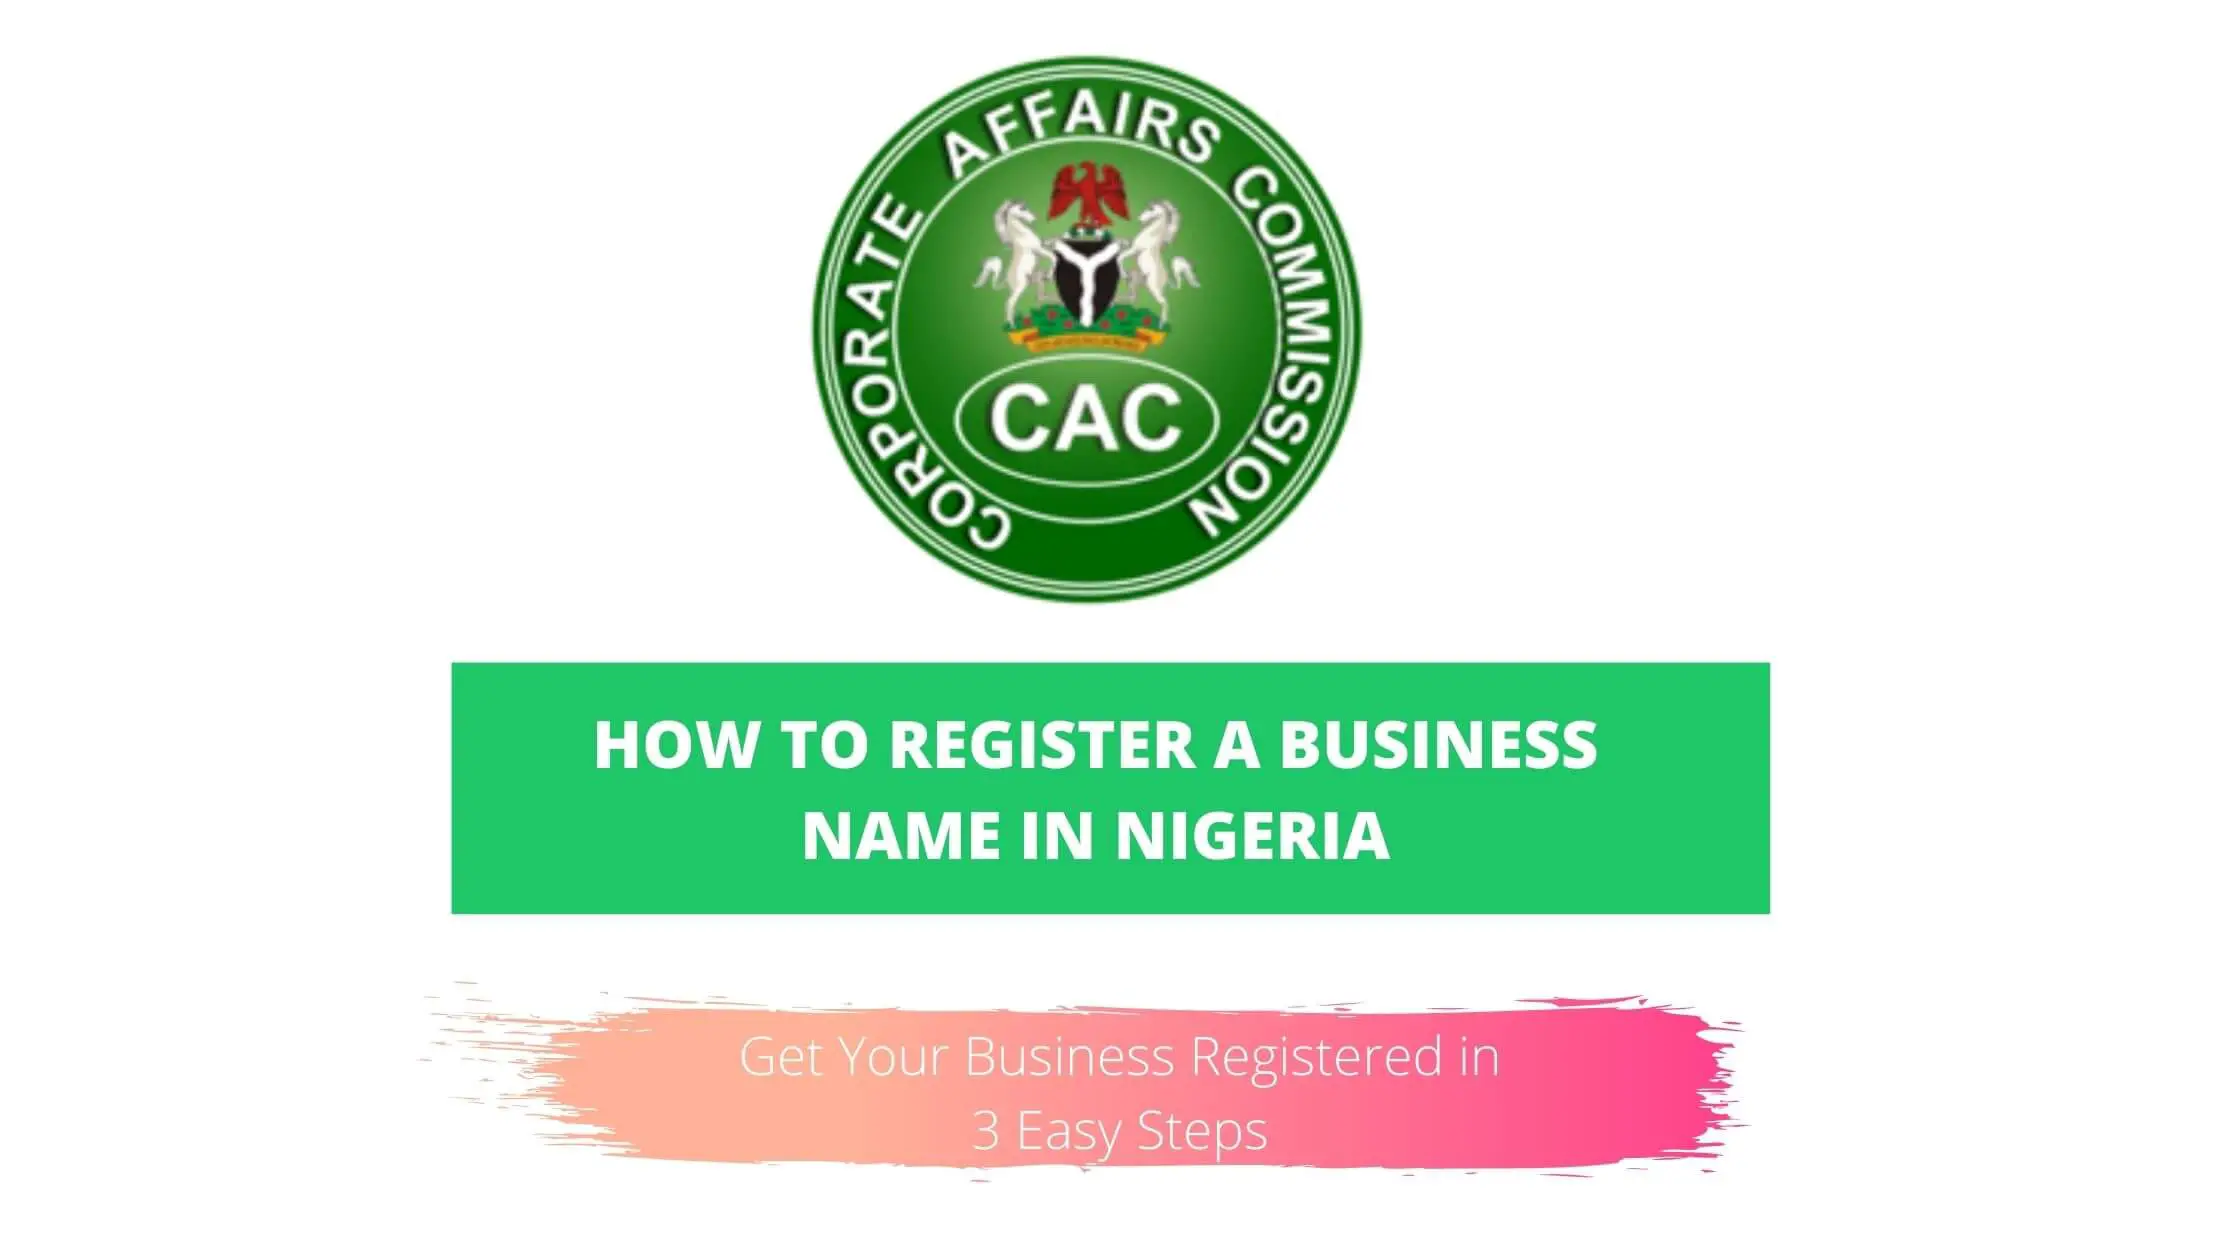 Business registration in Nigeria